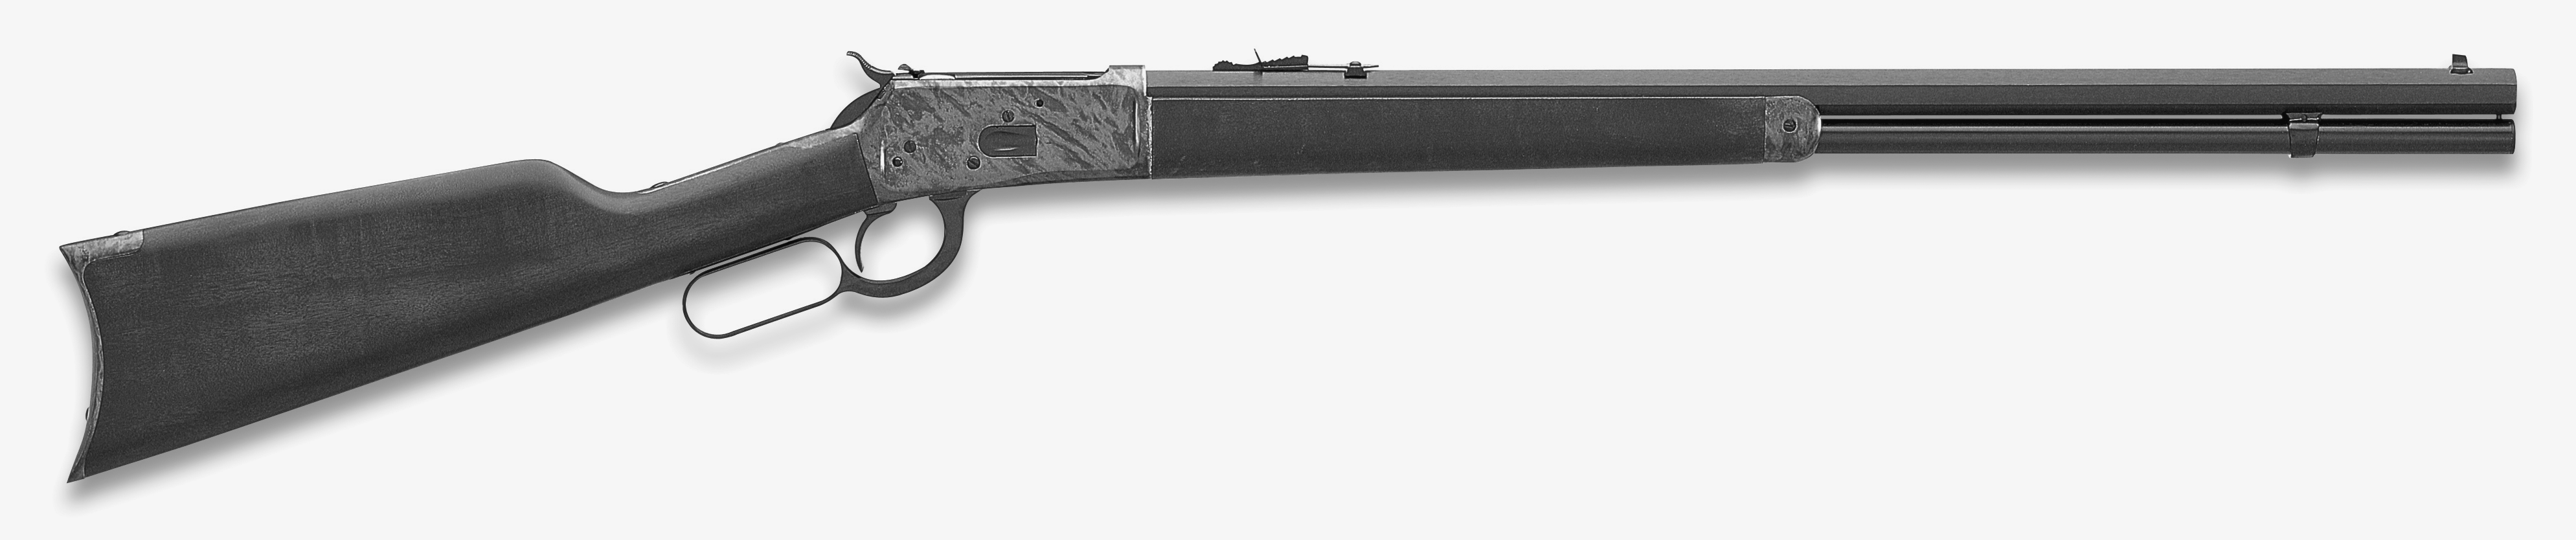 Model 92 Rifle